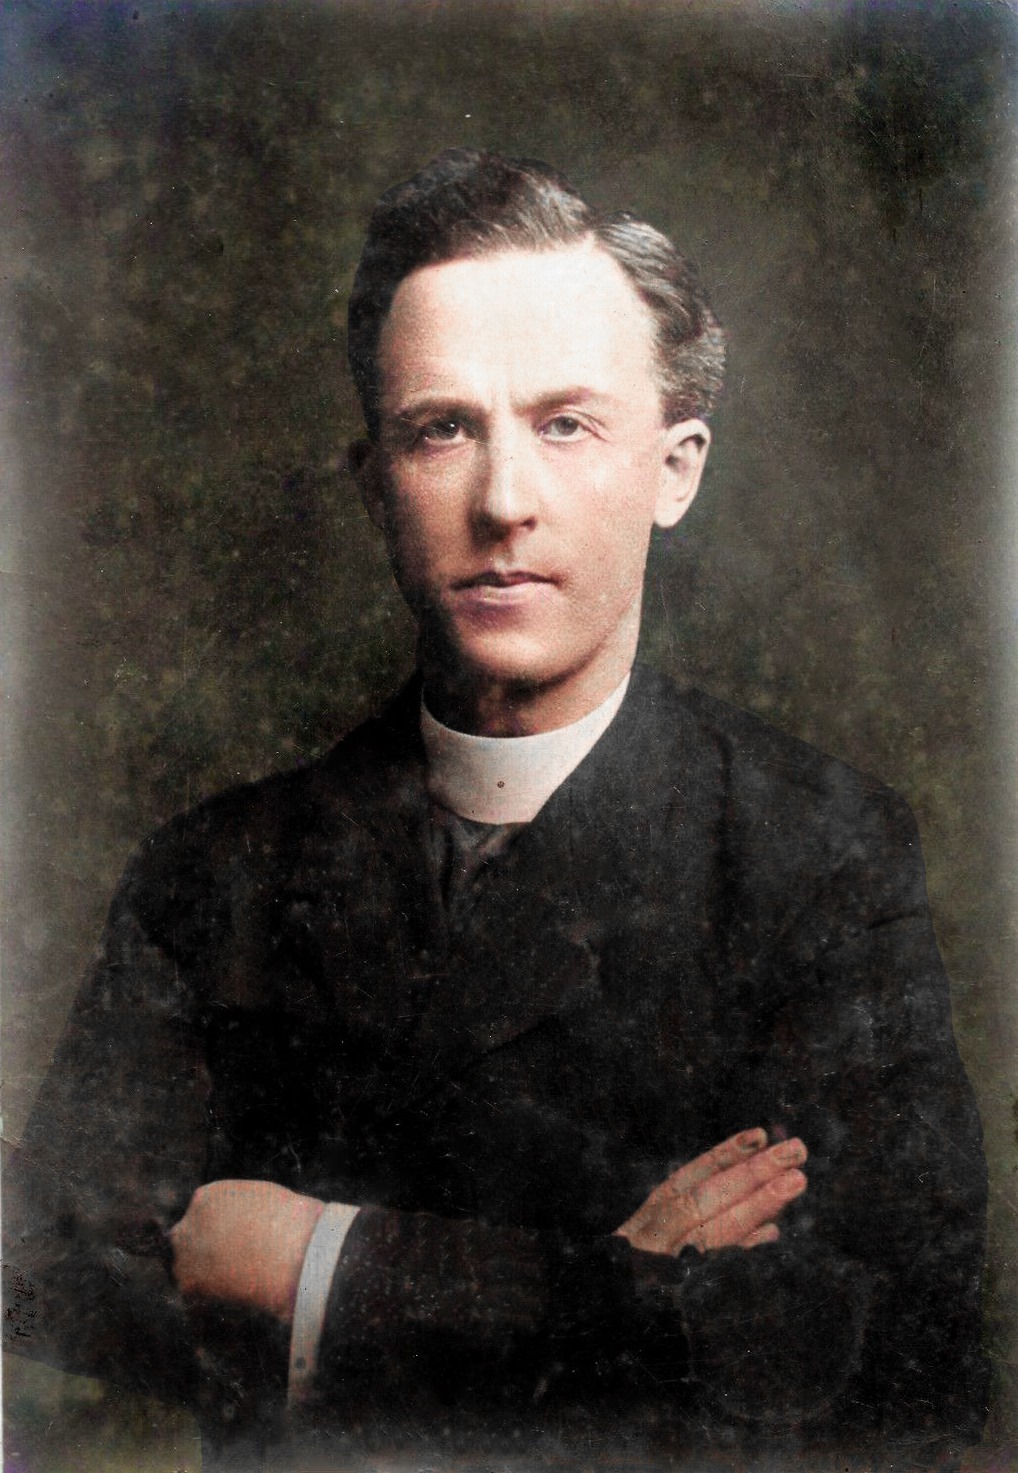 A postcard portrait of Fr. O'Flanagan, vice-president of Sinn Féin, published in 1919.